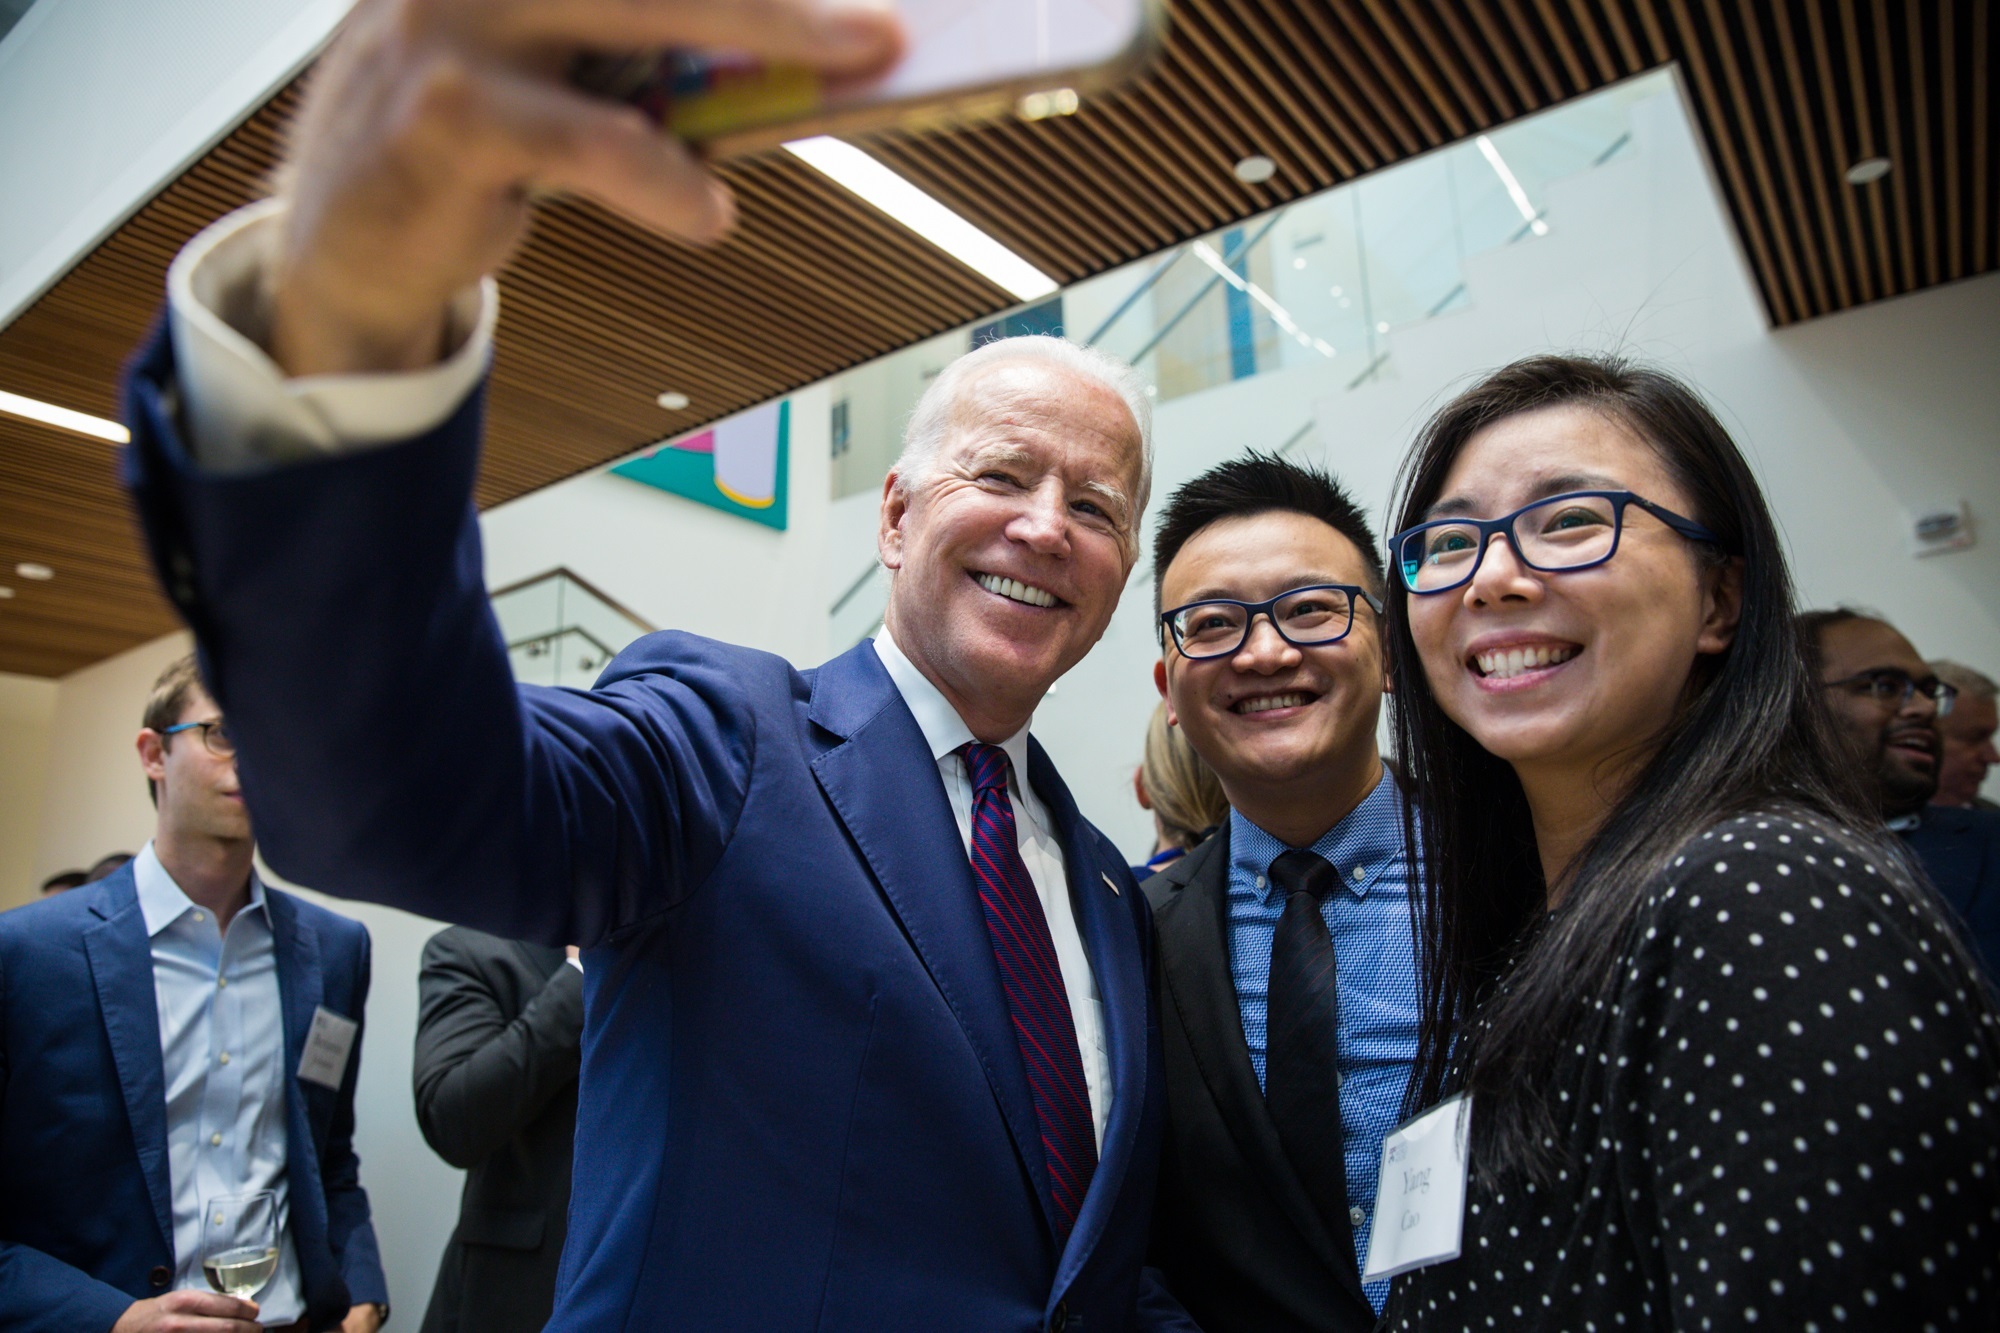 president biden taking selfie with students